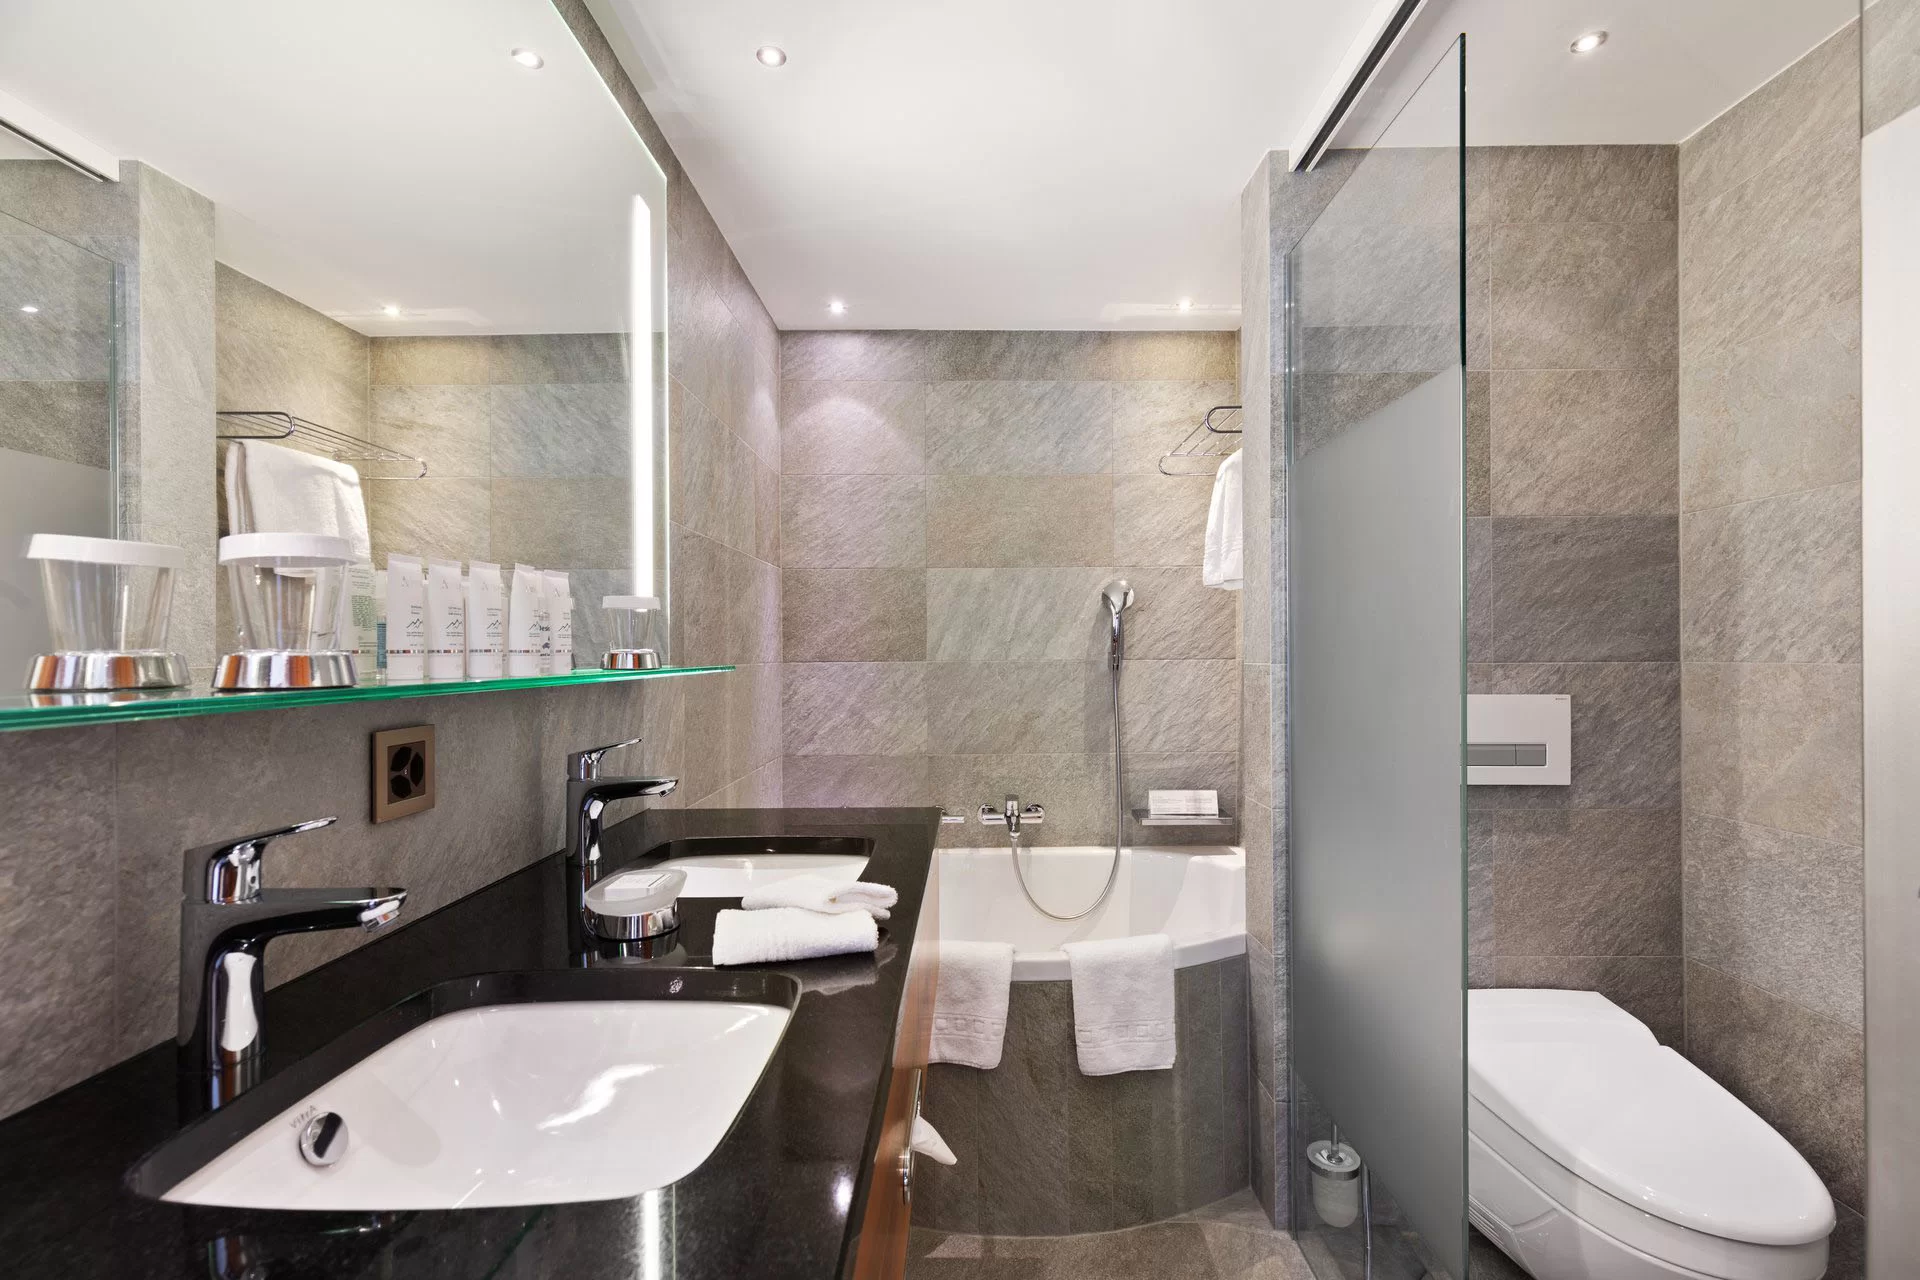 Grand Suite Matterhorn Bathroom - Grand Hotel Zermatterhof